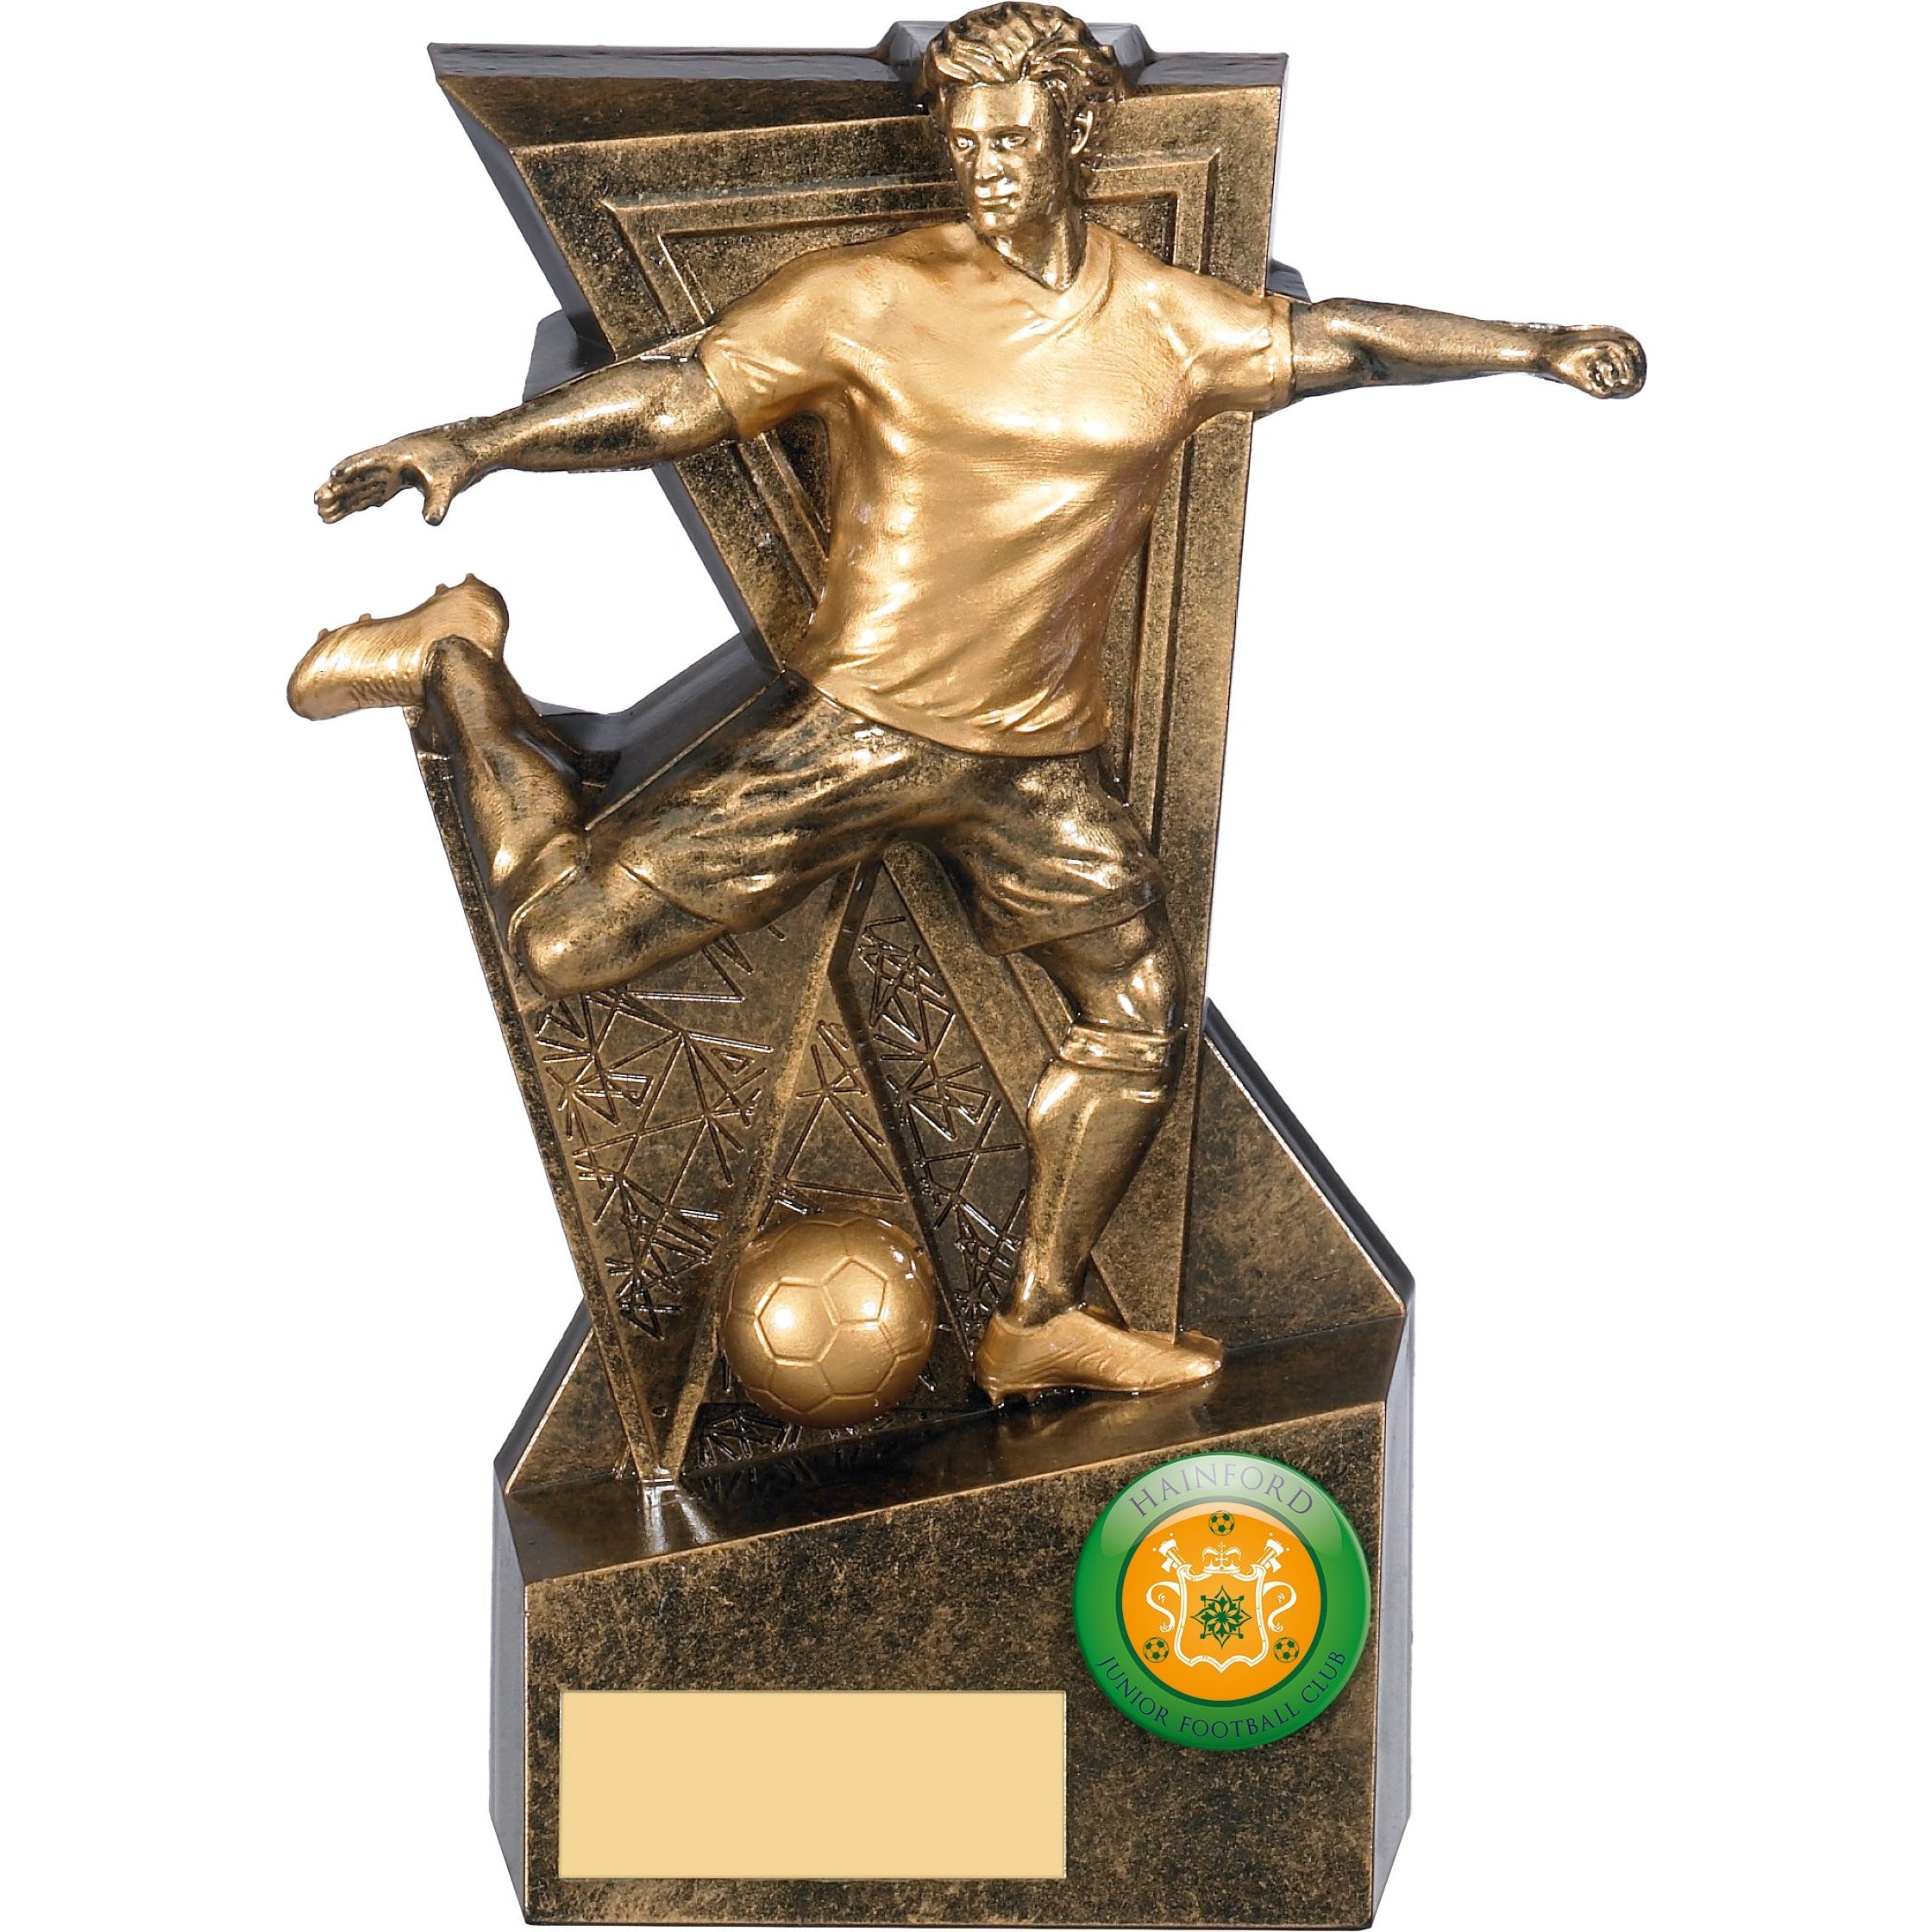 Legacy Male Football Figurine Award (CLEARANCE)